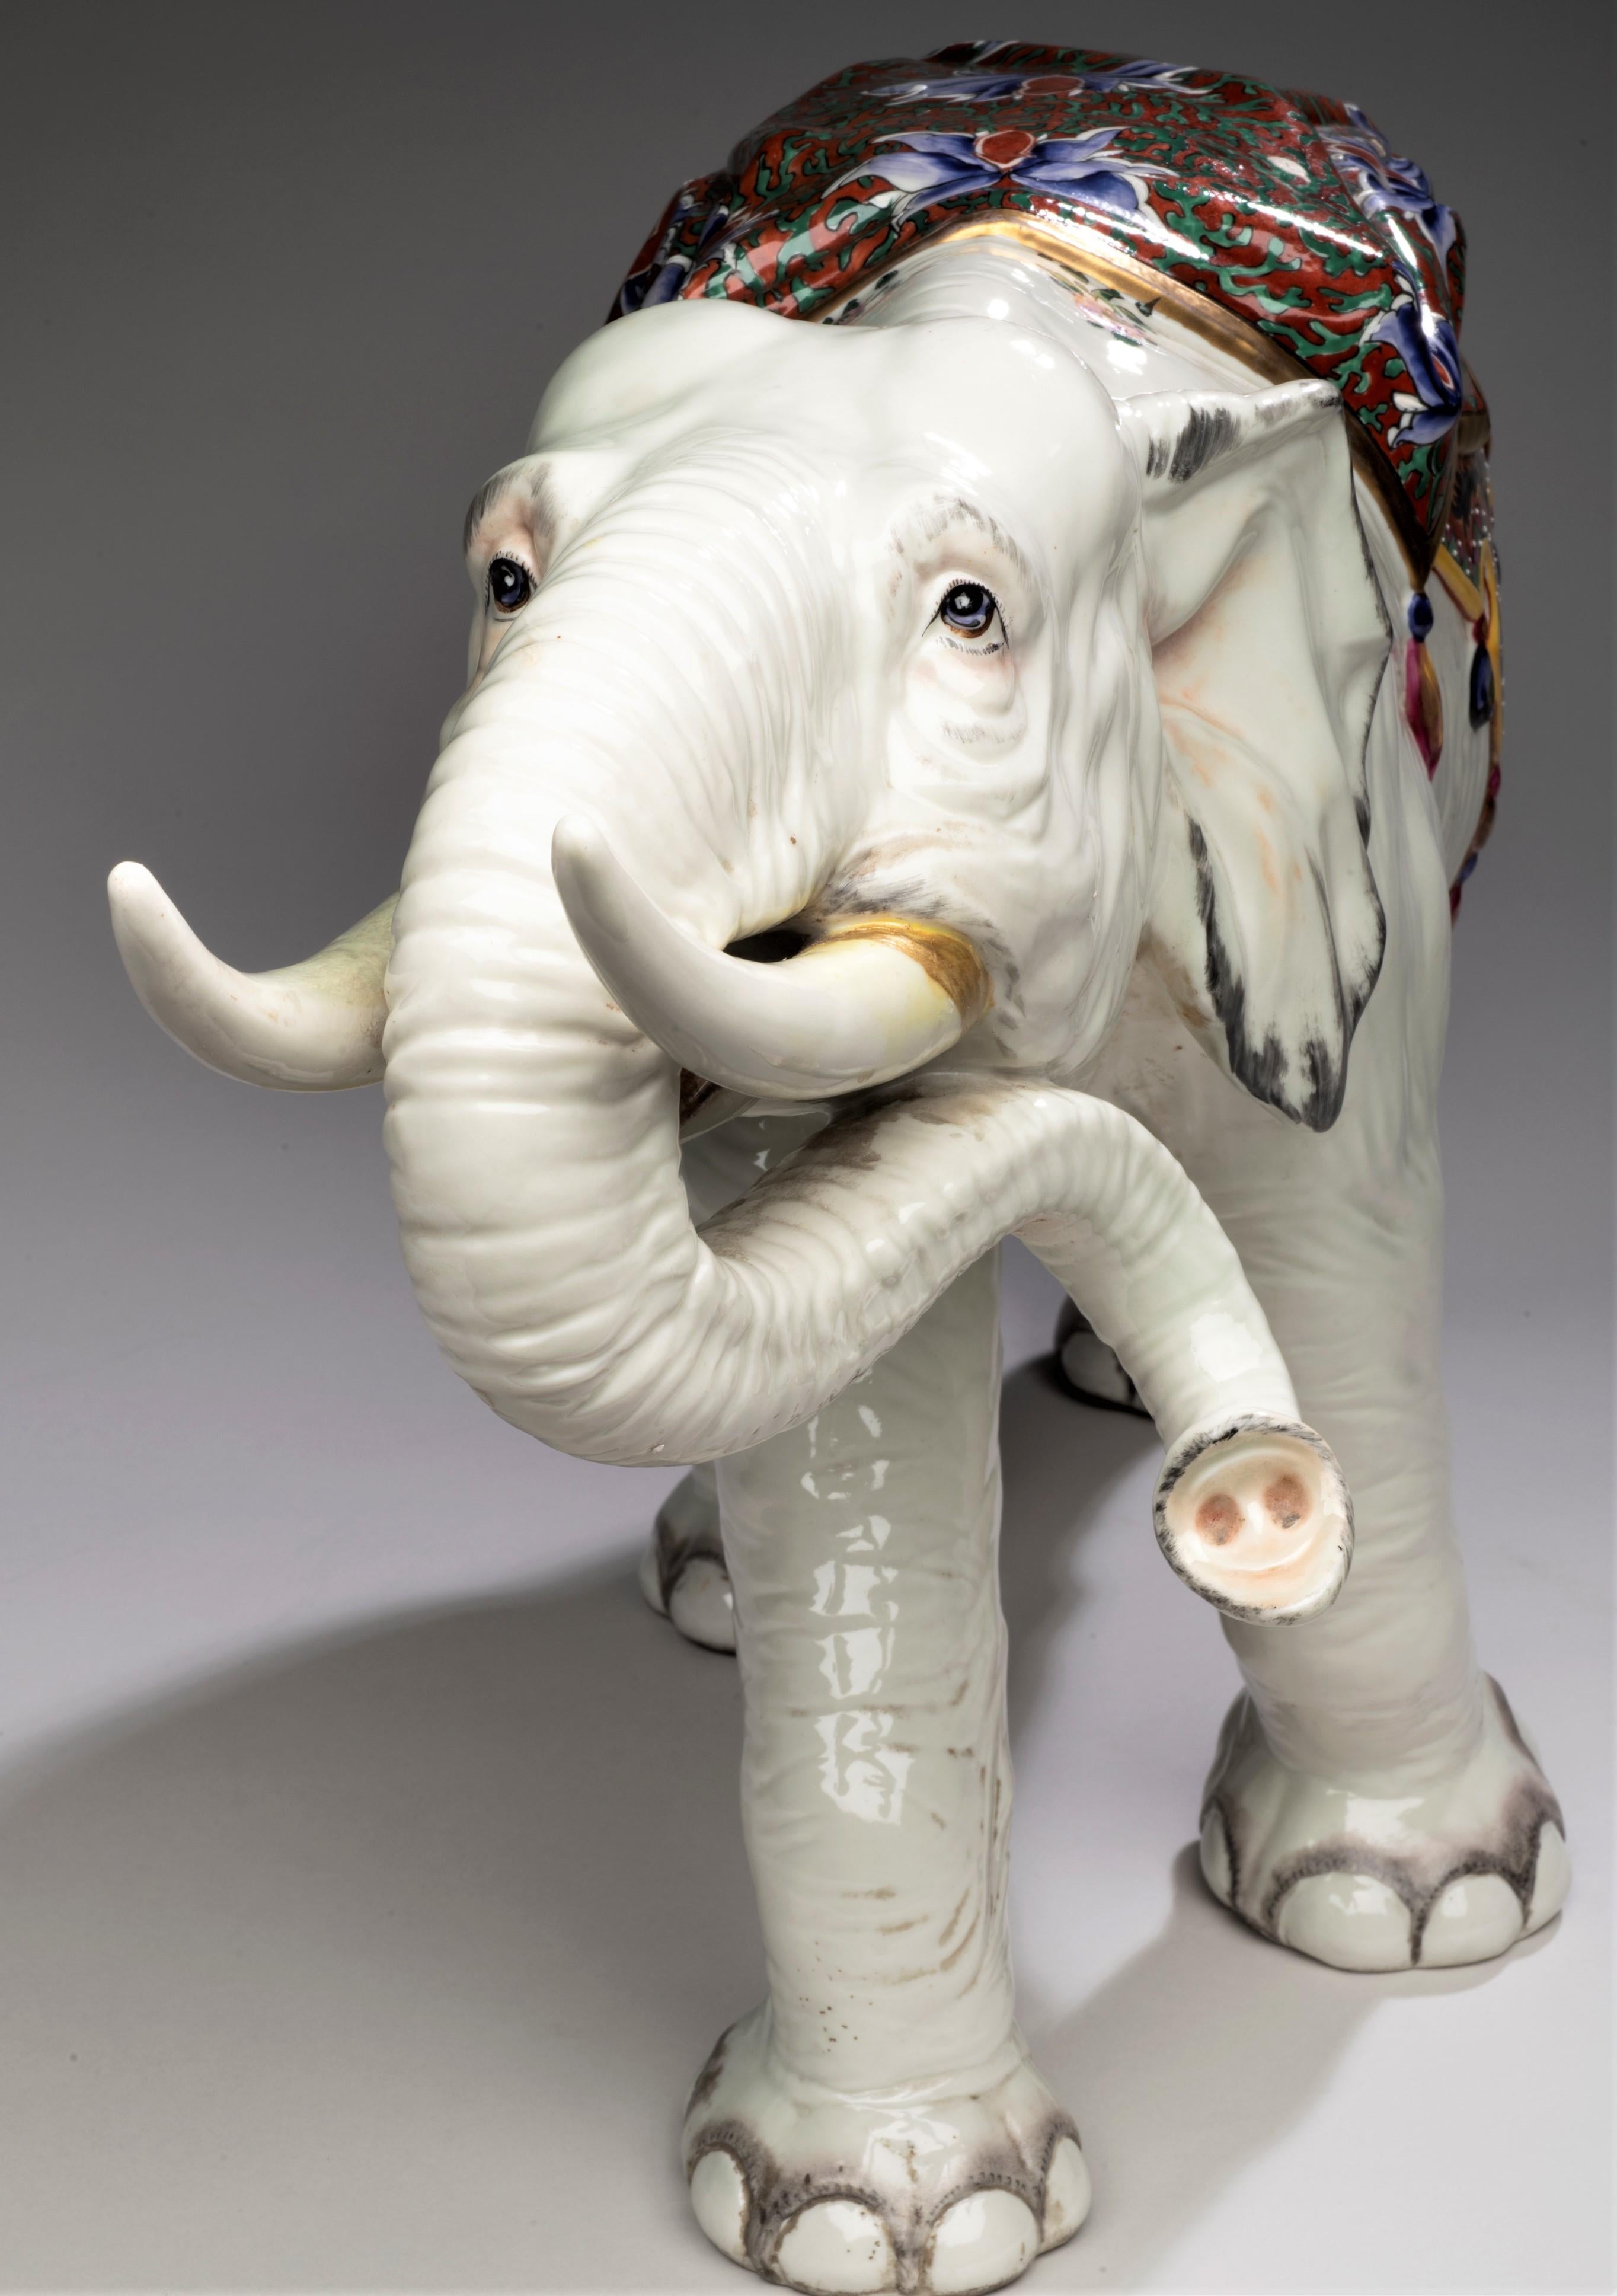 Very Large Porcelain Elephant
France, circa 1900
Porcelain, enamels
28 x 14 1/2 x 9 inches

